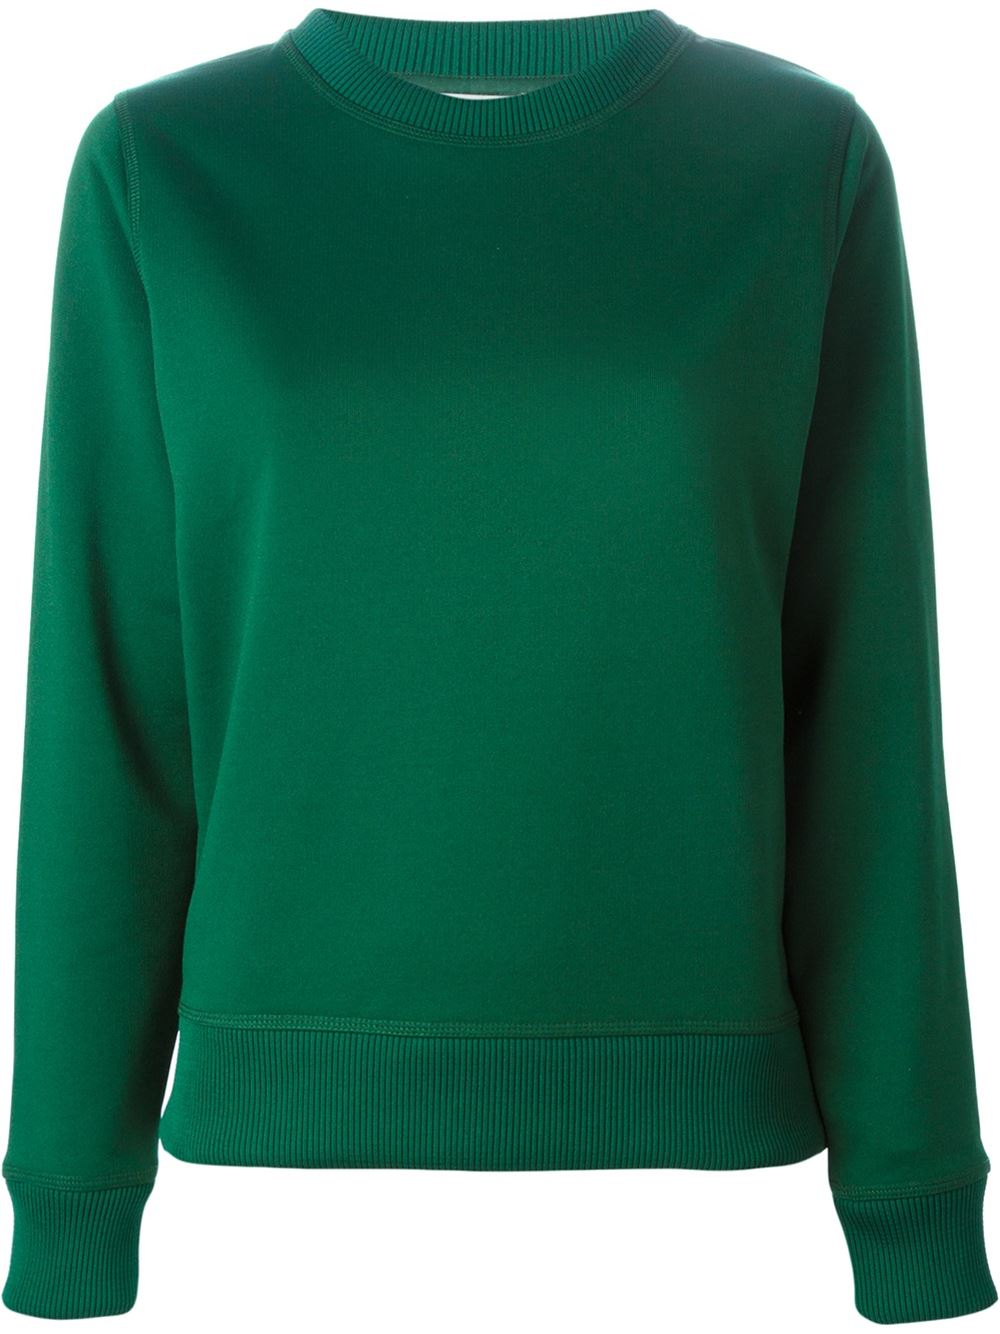 Lyst - Acne Studios 'Vernina' Sweatshirt in Green